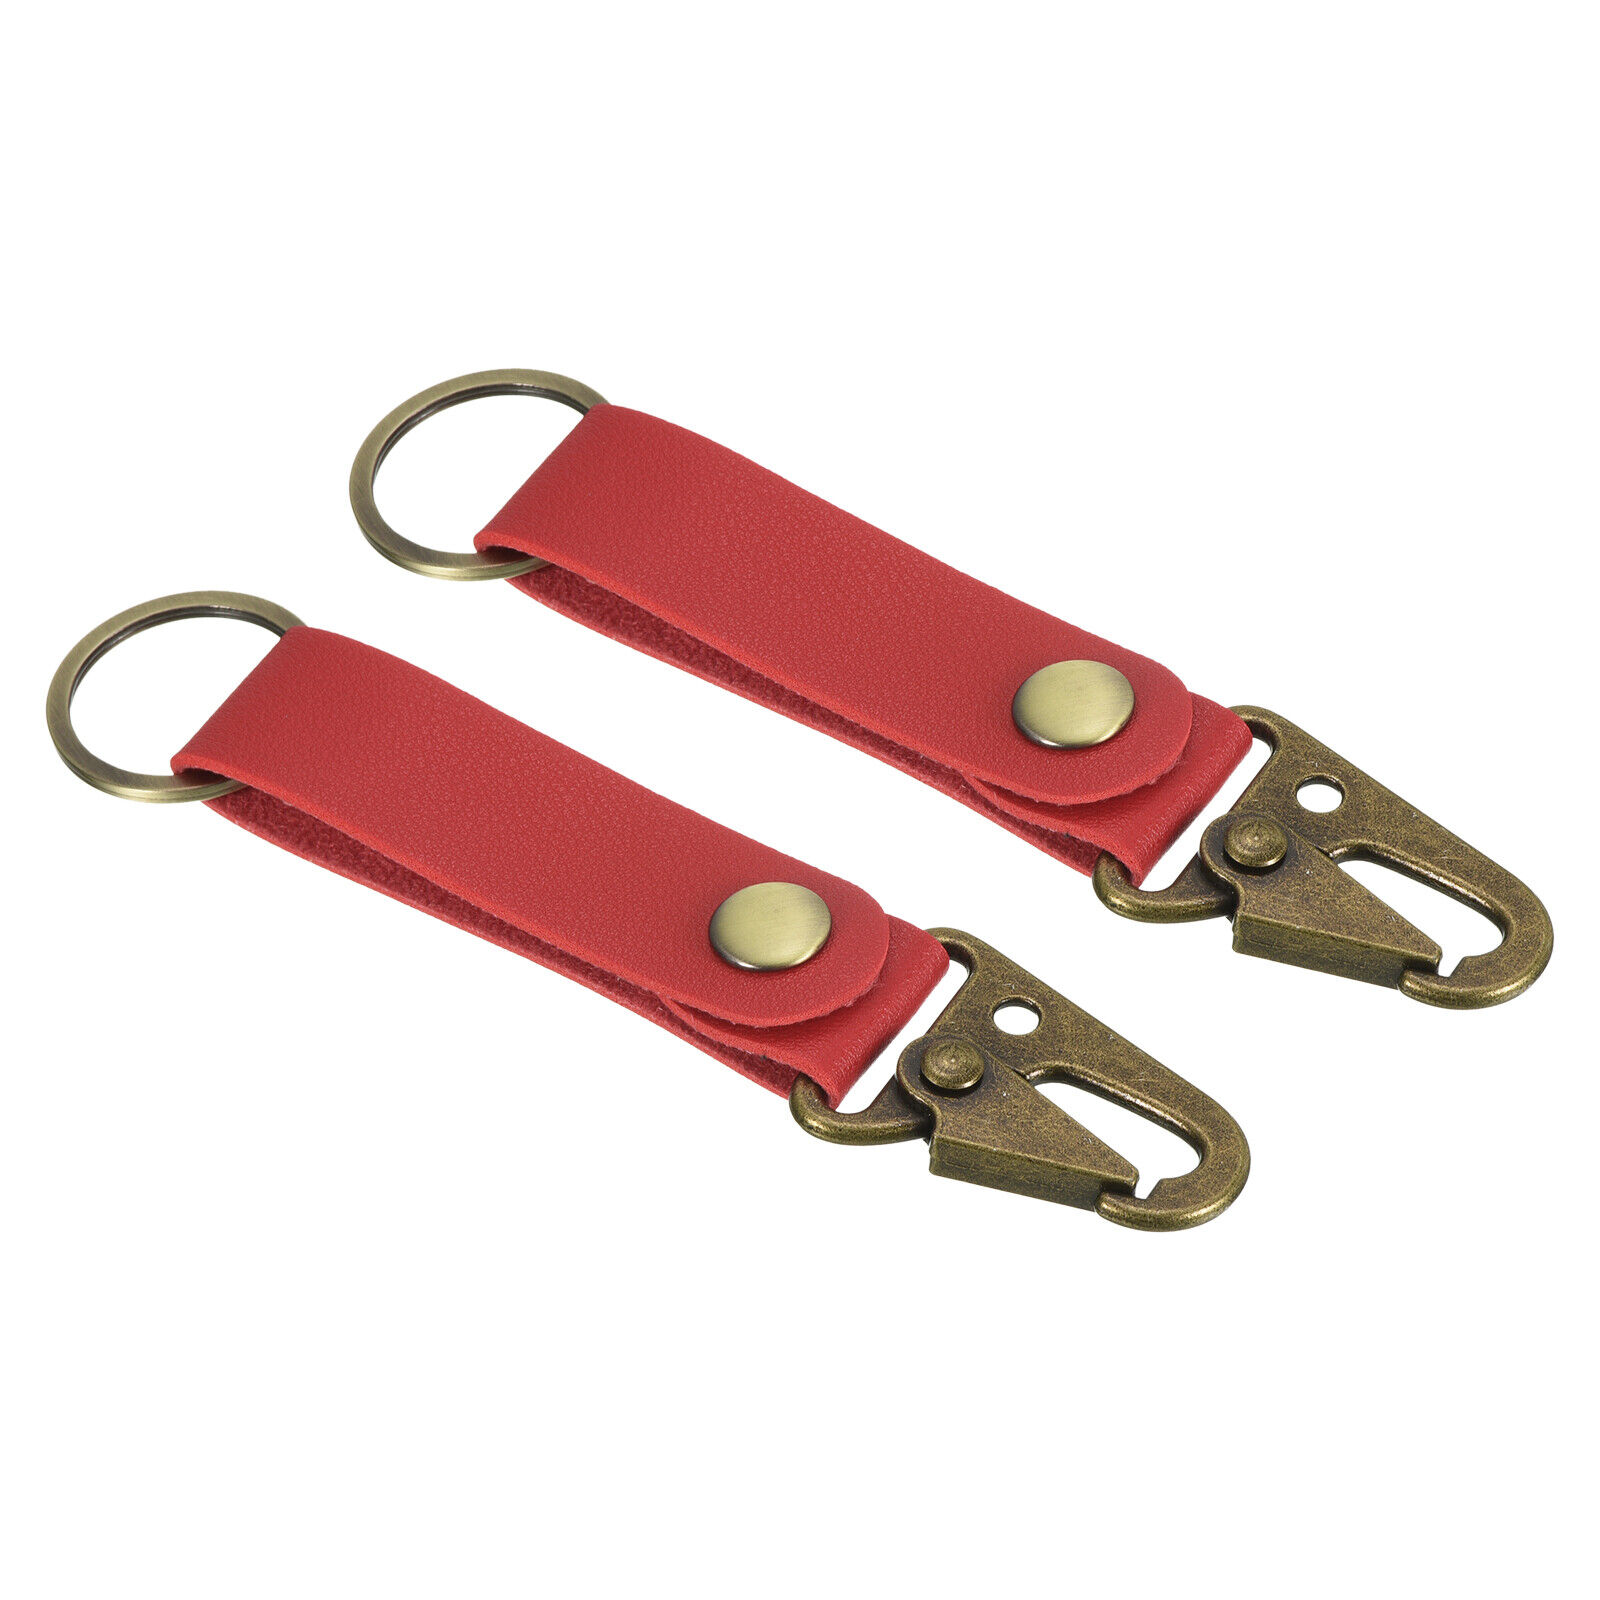 Leather Keychain, 2 Pack Pu Belt Clip Key Ring Fob Holder For Bag Wallet, Red